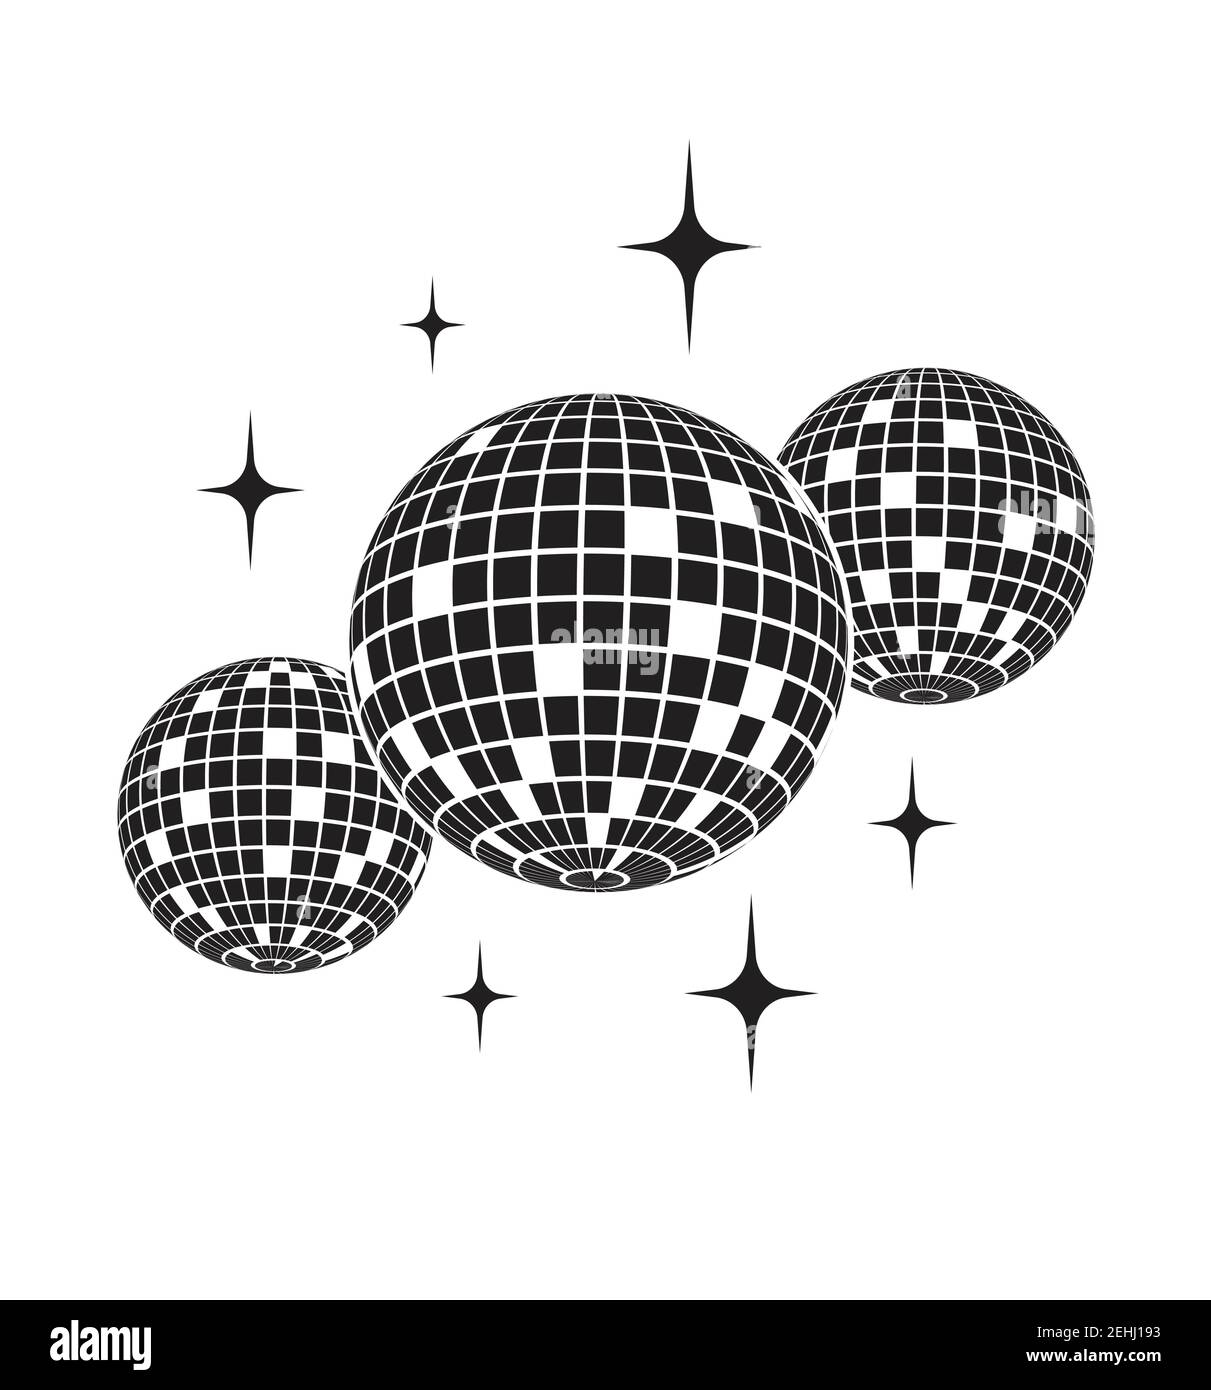 w dowolnym momencie Bankiet Atlas disco ball vector - shiba-inu.com.pl